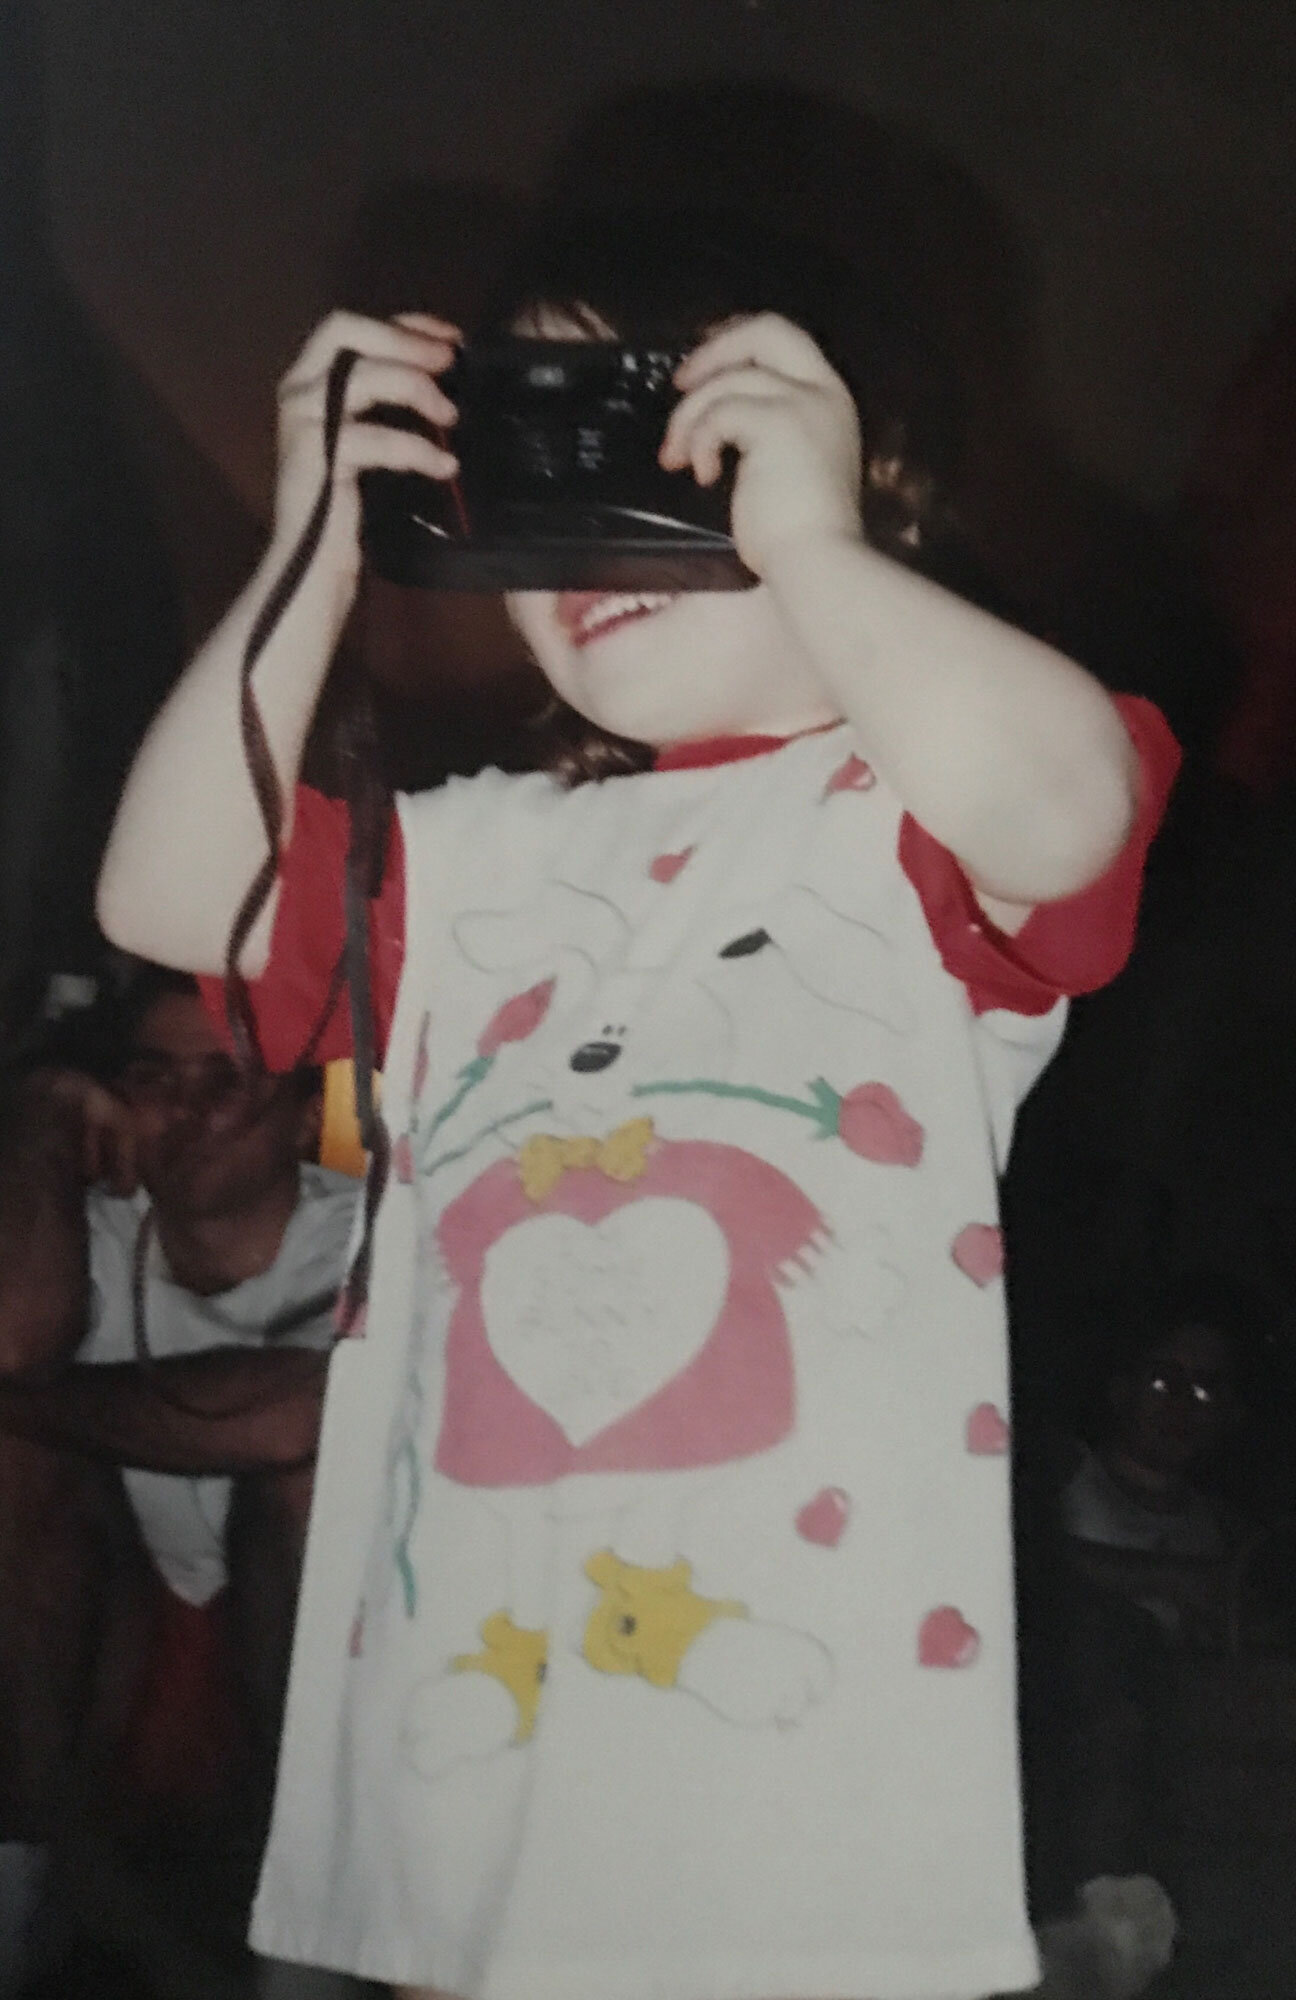 New Jersey Child with Polaroid Camera